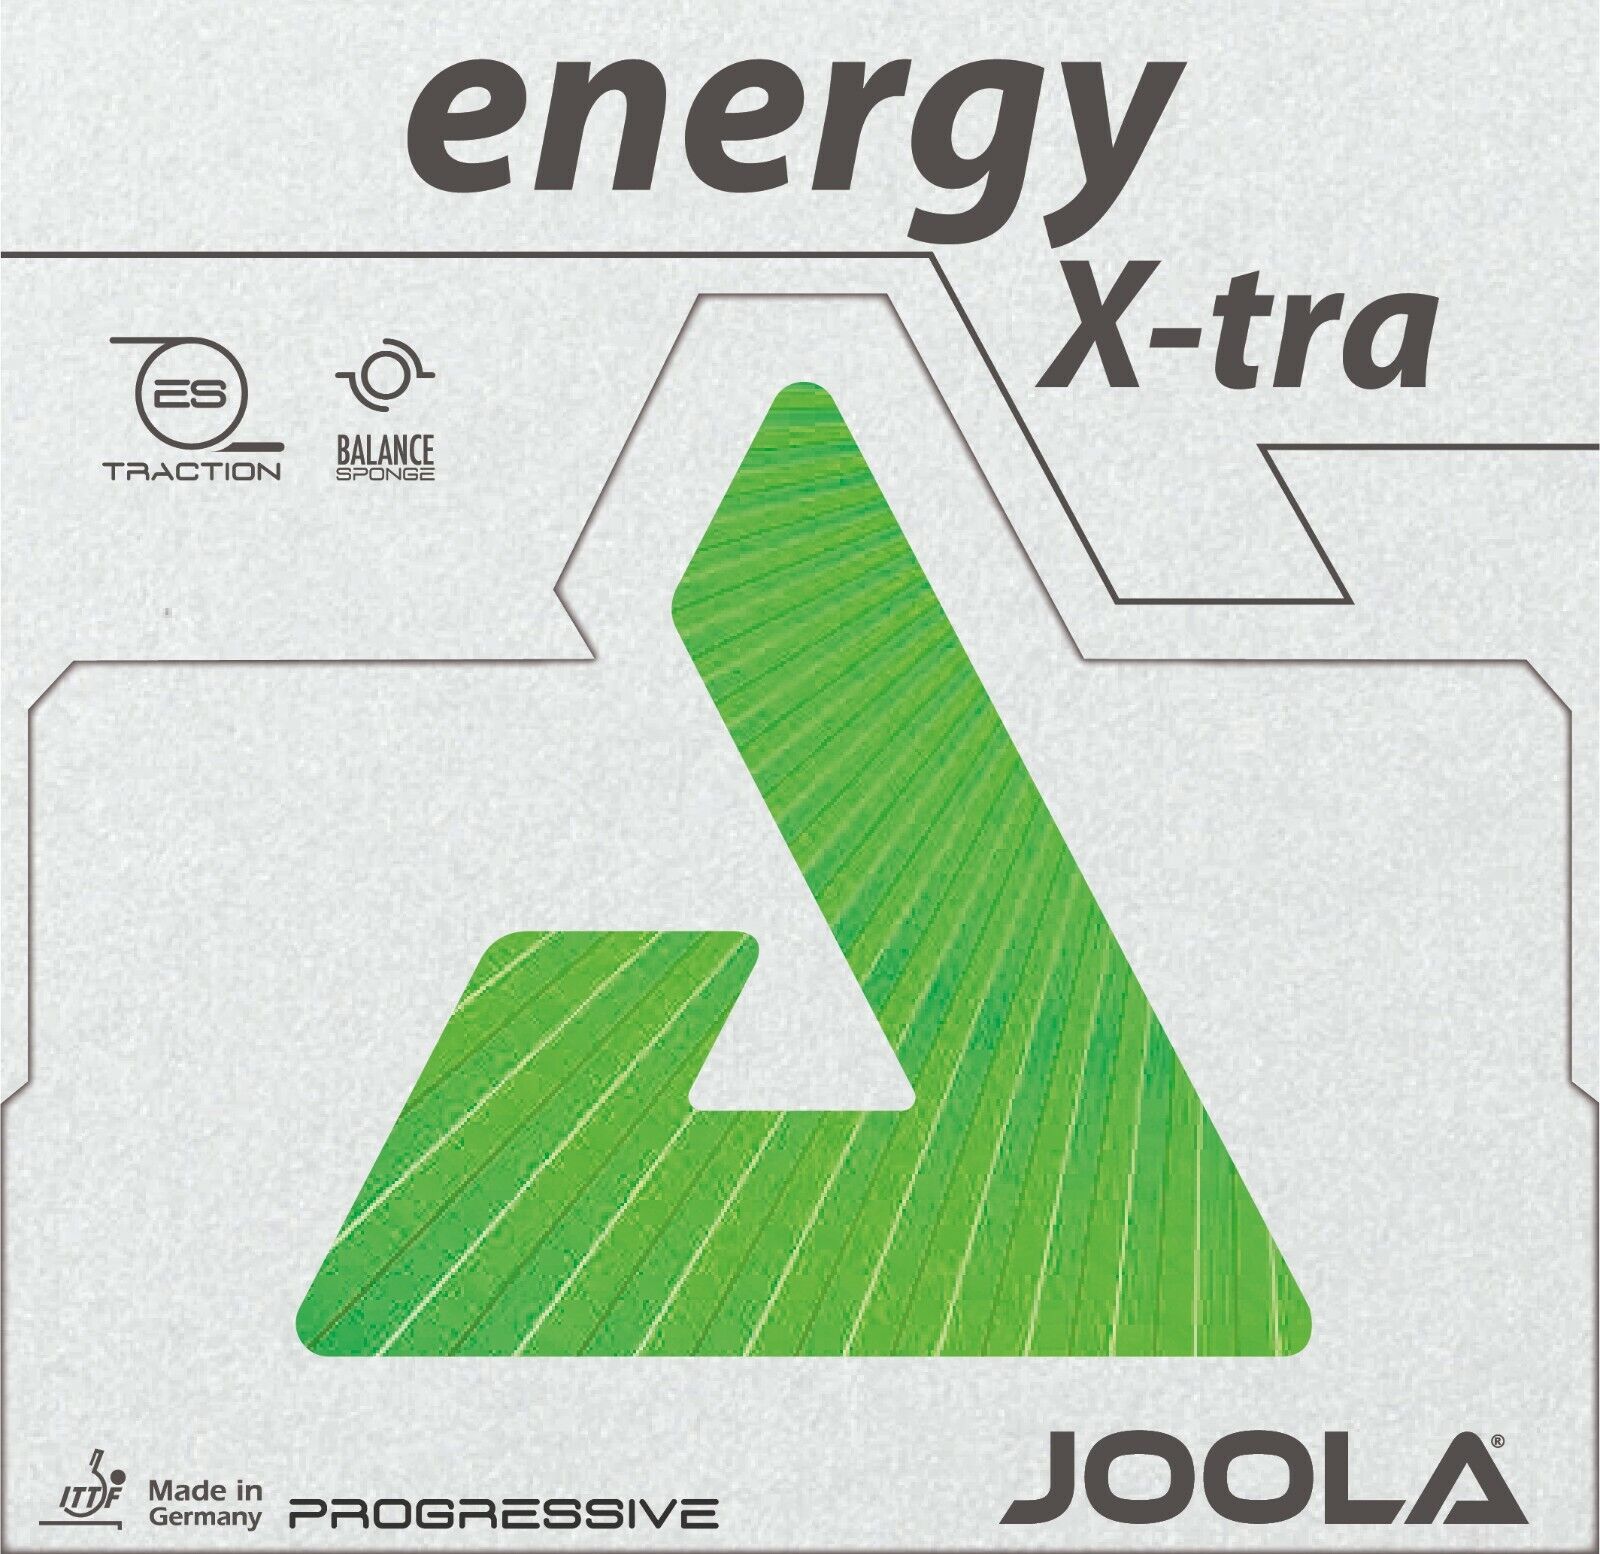 Joola Energy X-tra Table Tennis Rubber eBay